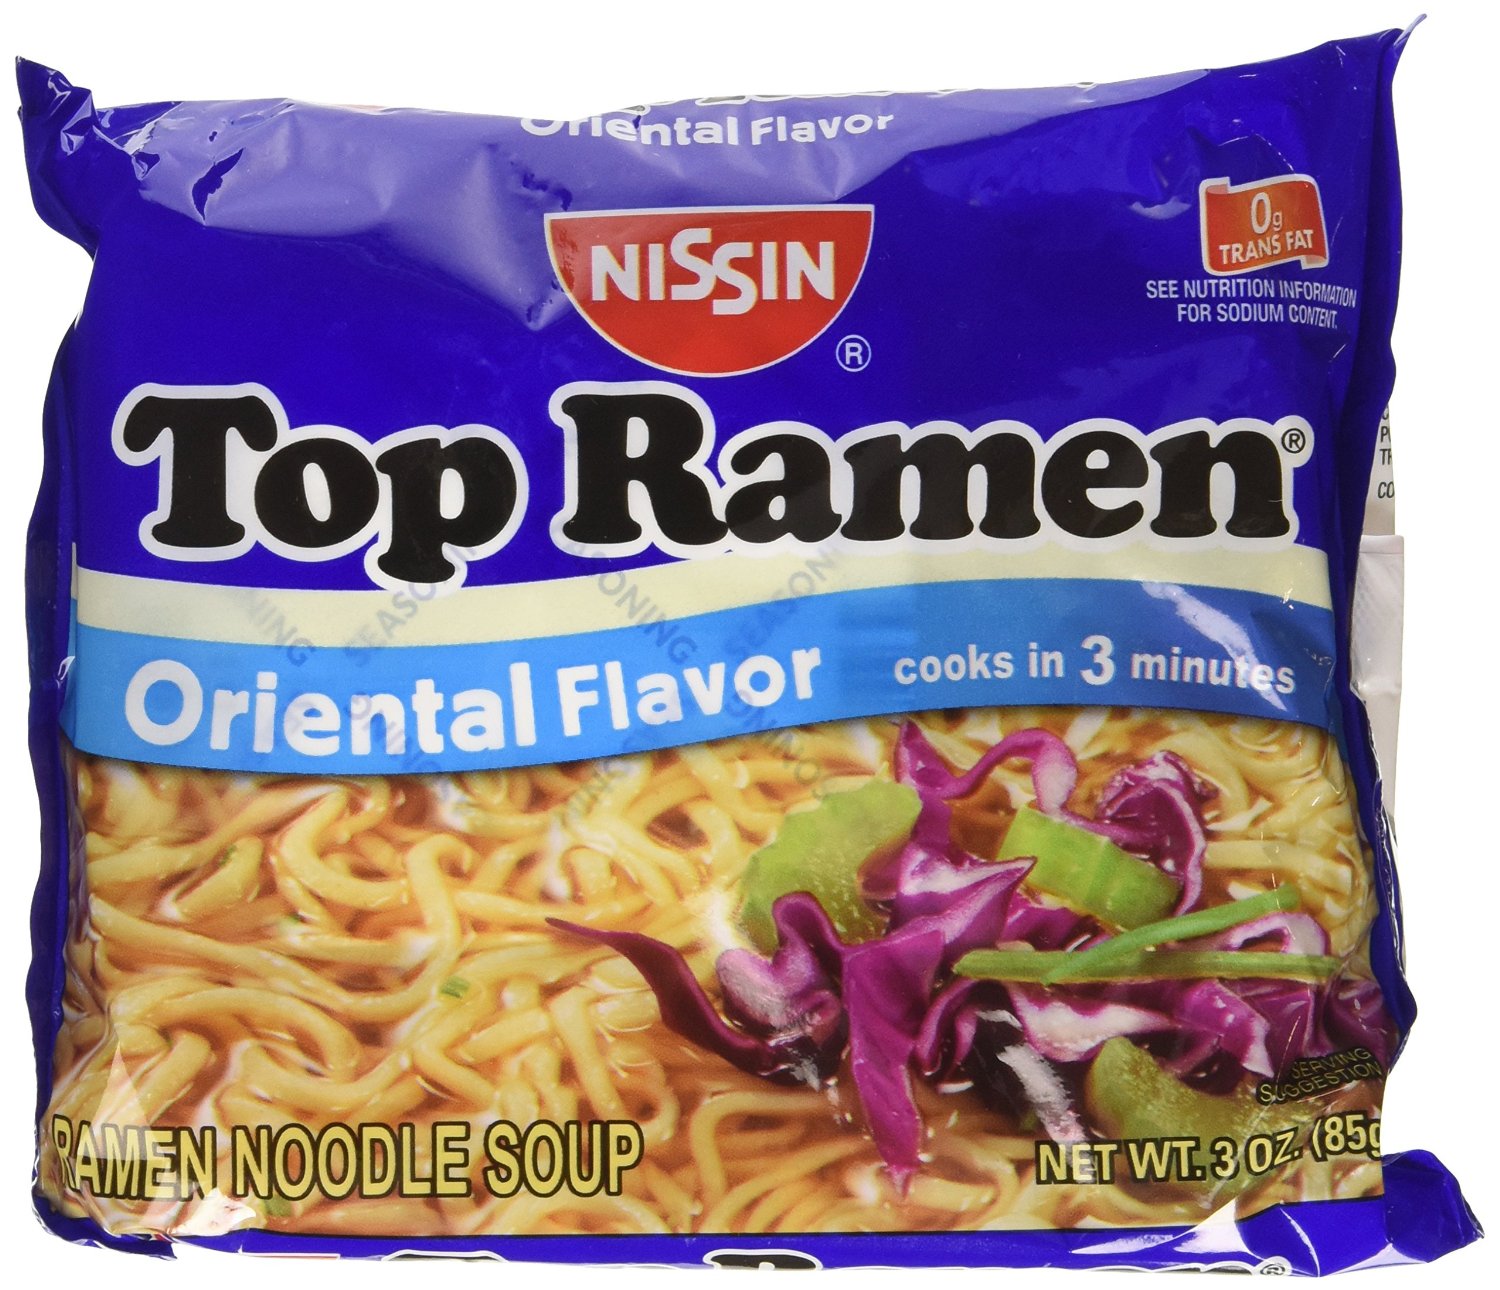 Are Ramen Noodles Vegan? » Vegan Food Lover